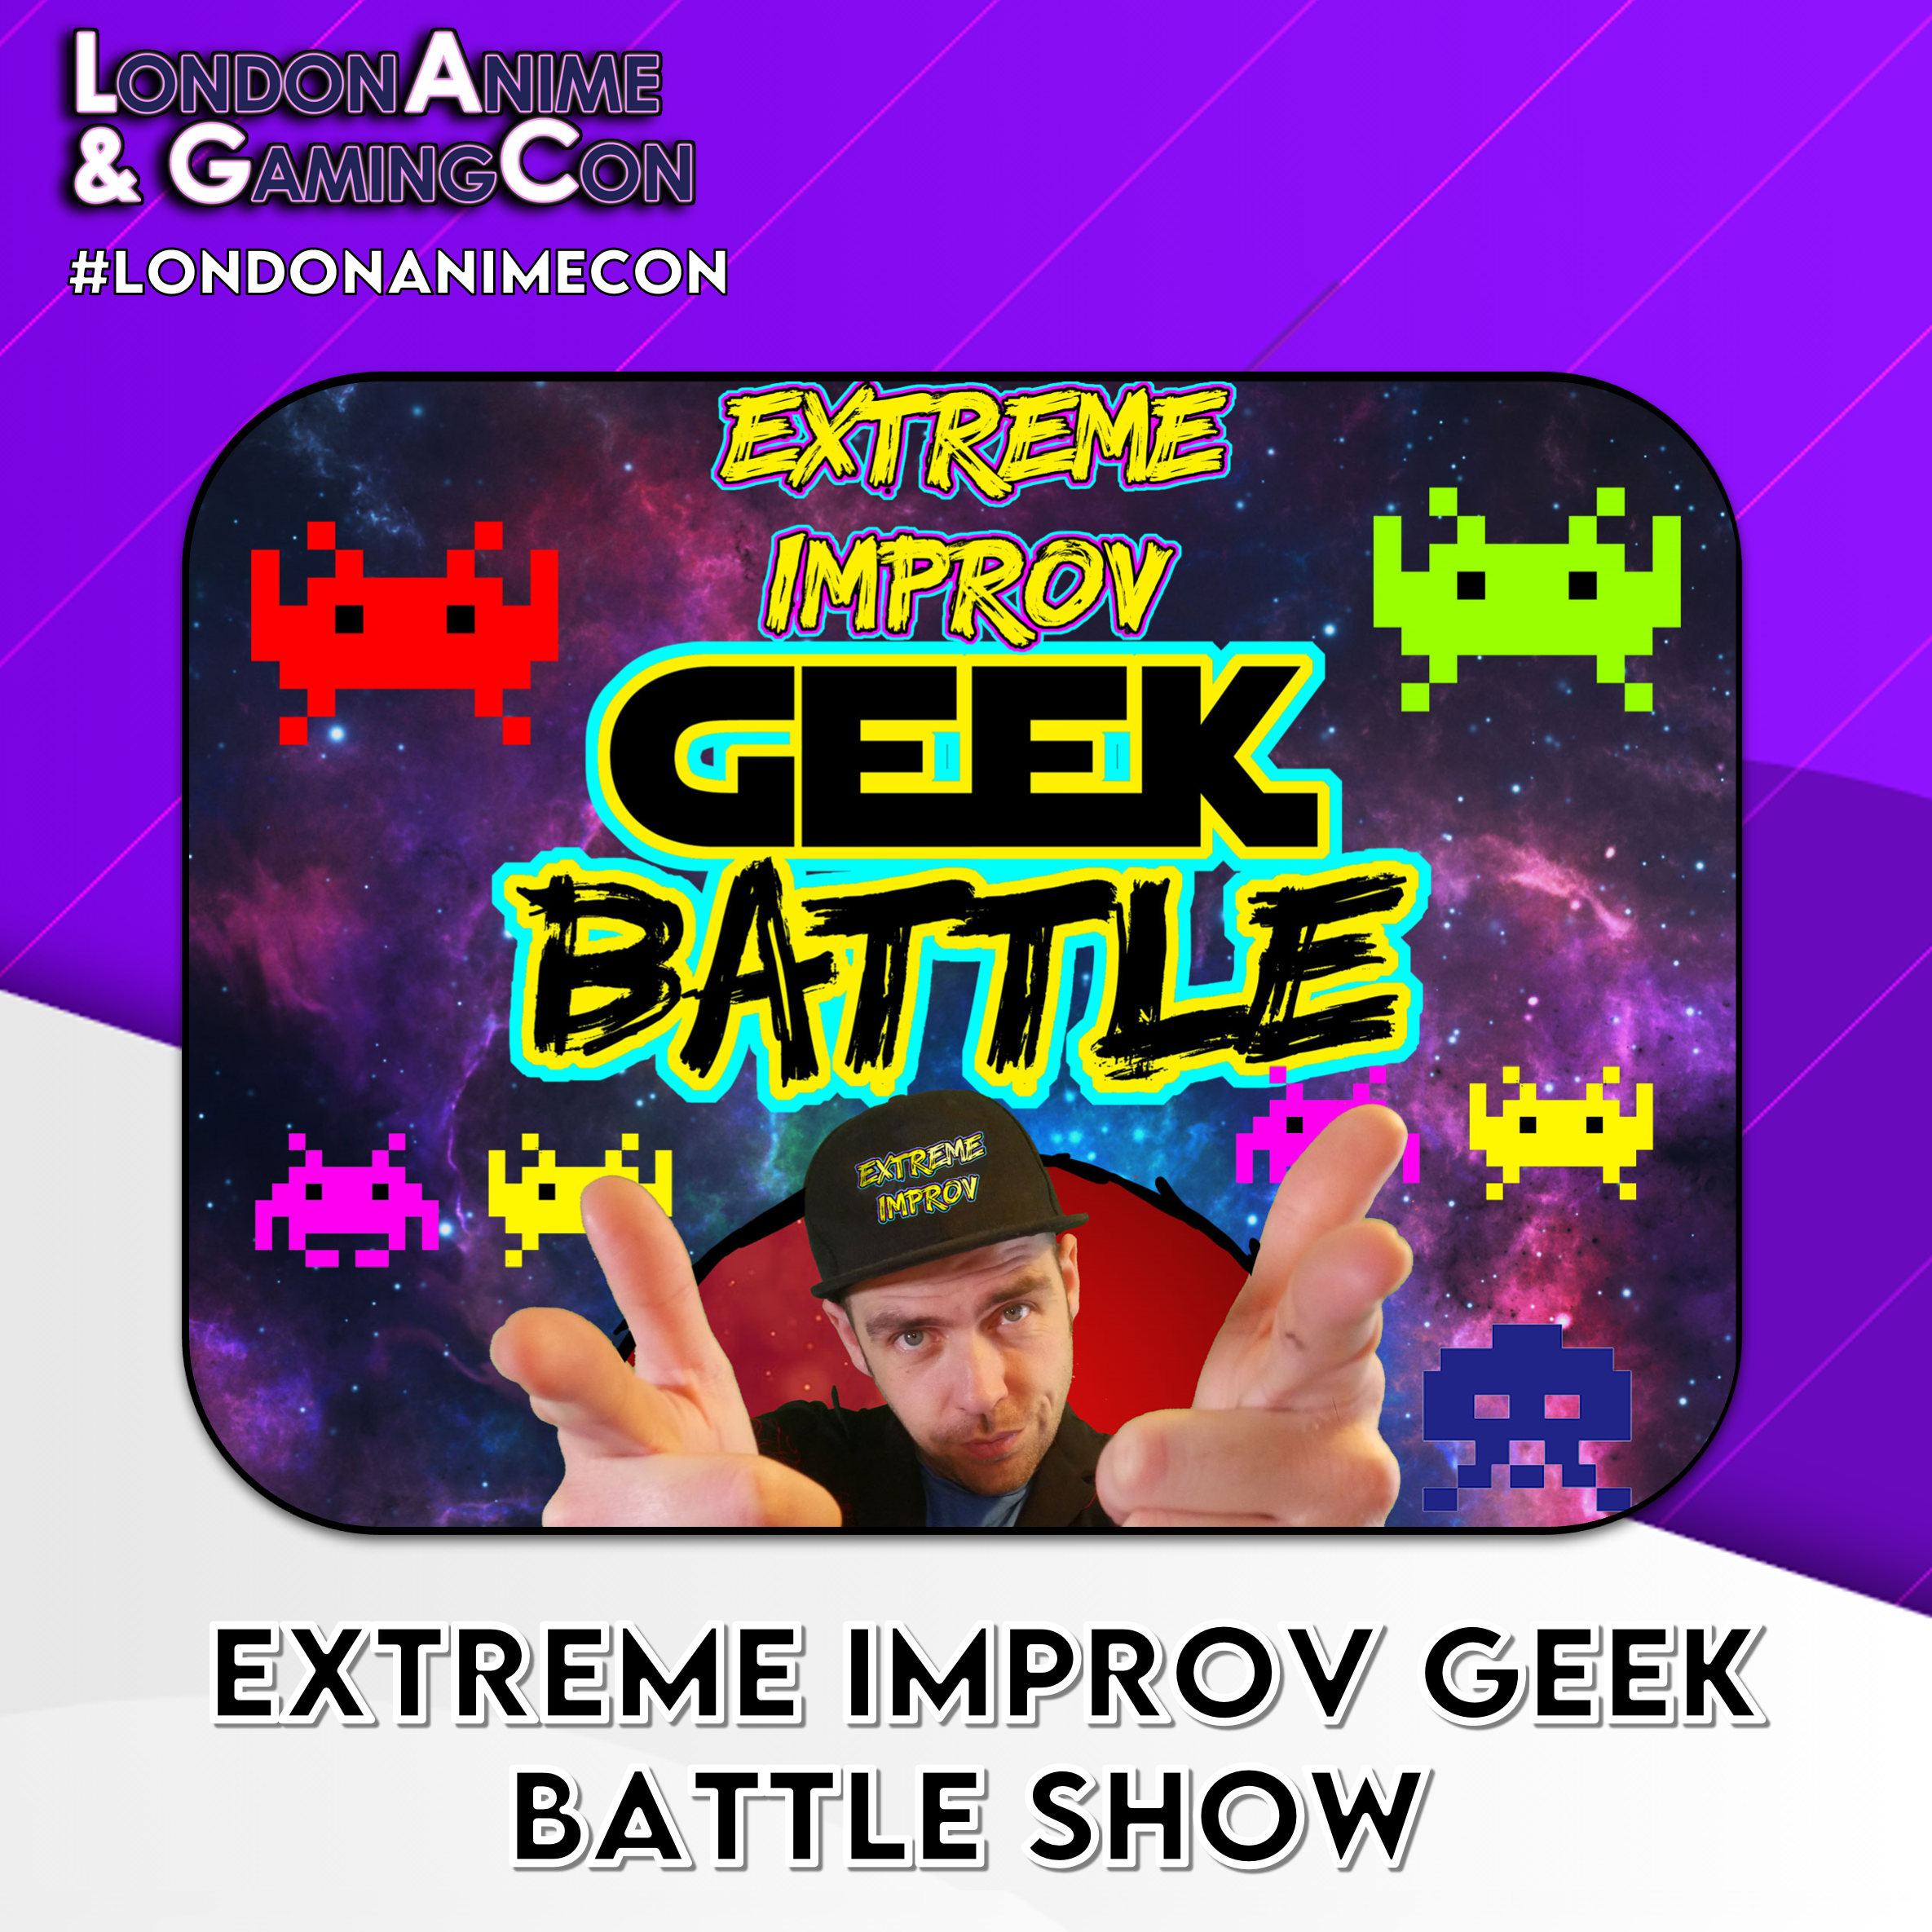 Extreme Improv Geek Battle Show